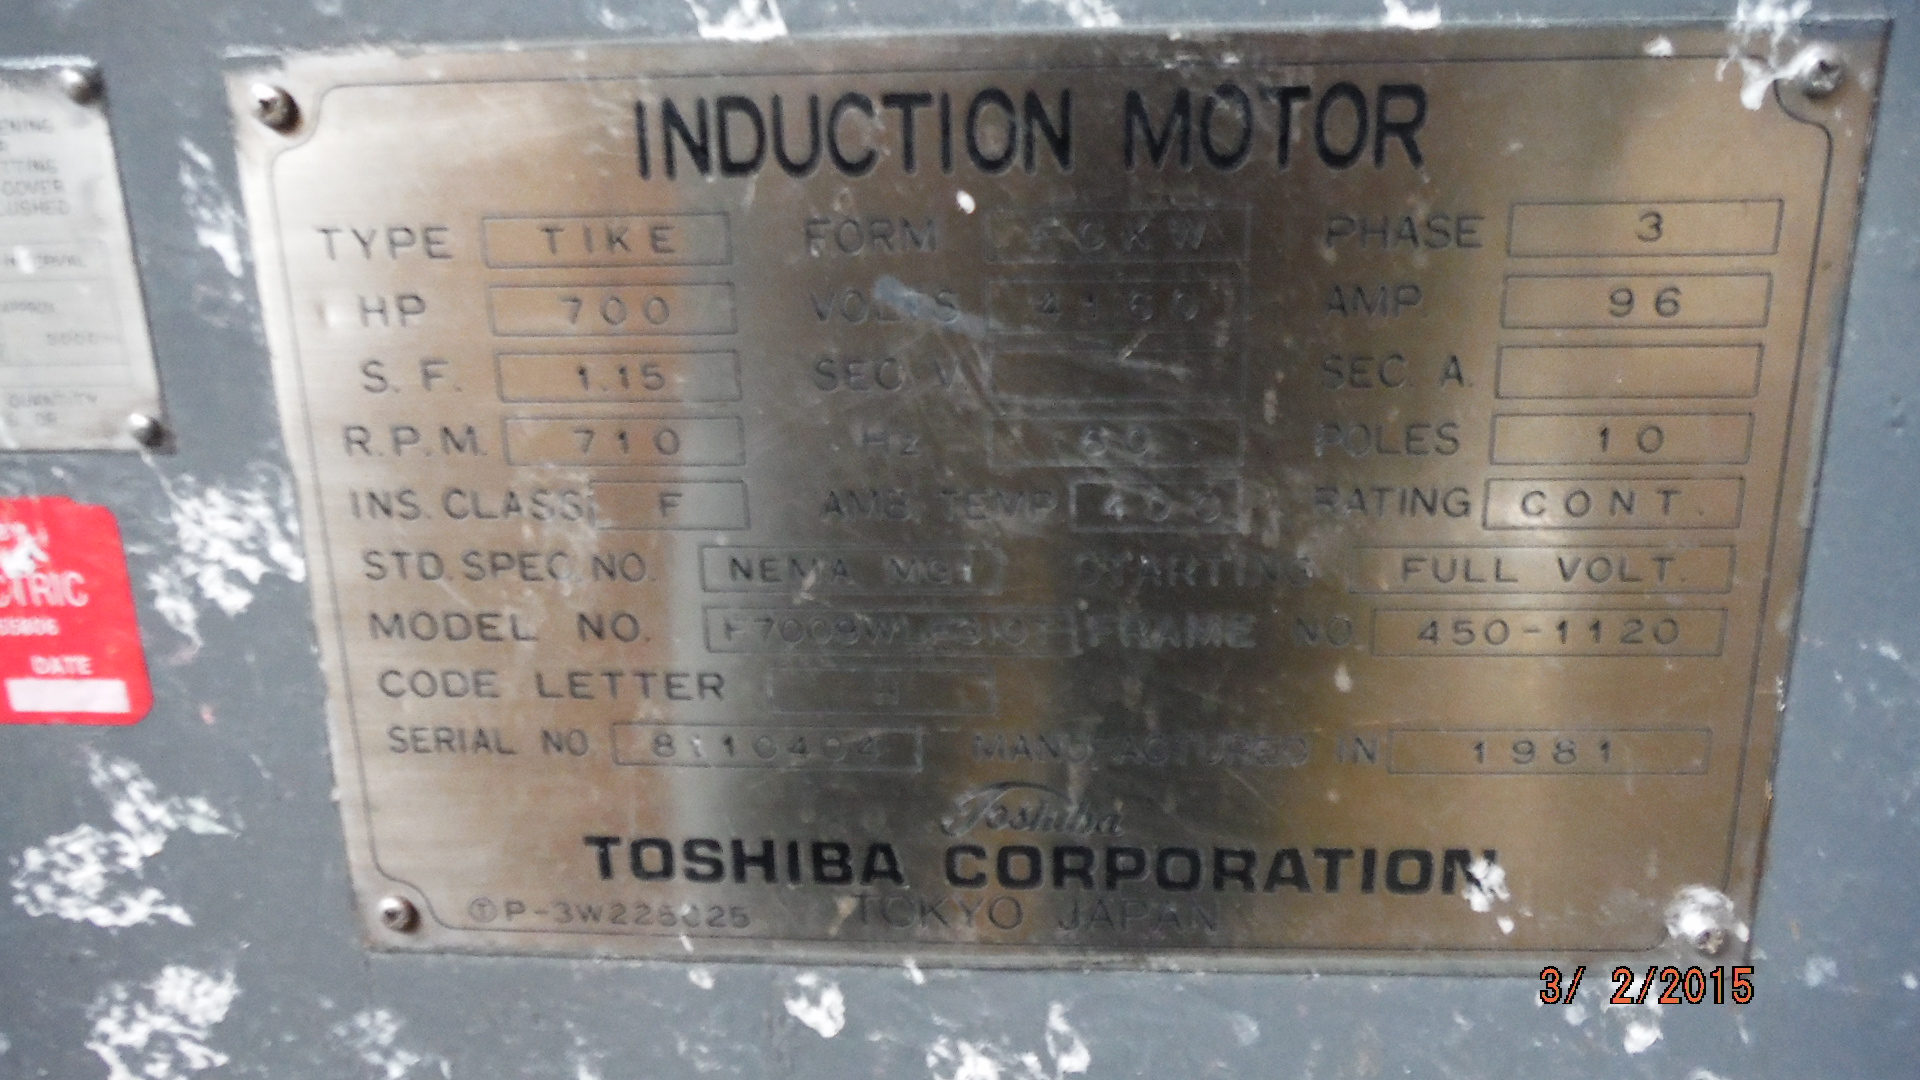 Toshiba 700 HP 720 RPM 450-1120 Squirrel Cage Motors 73004